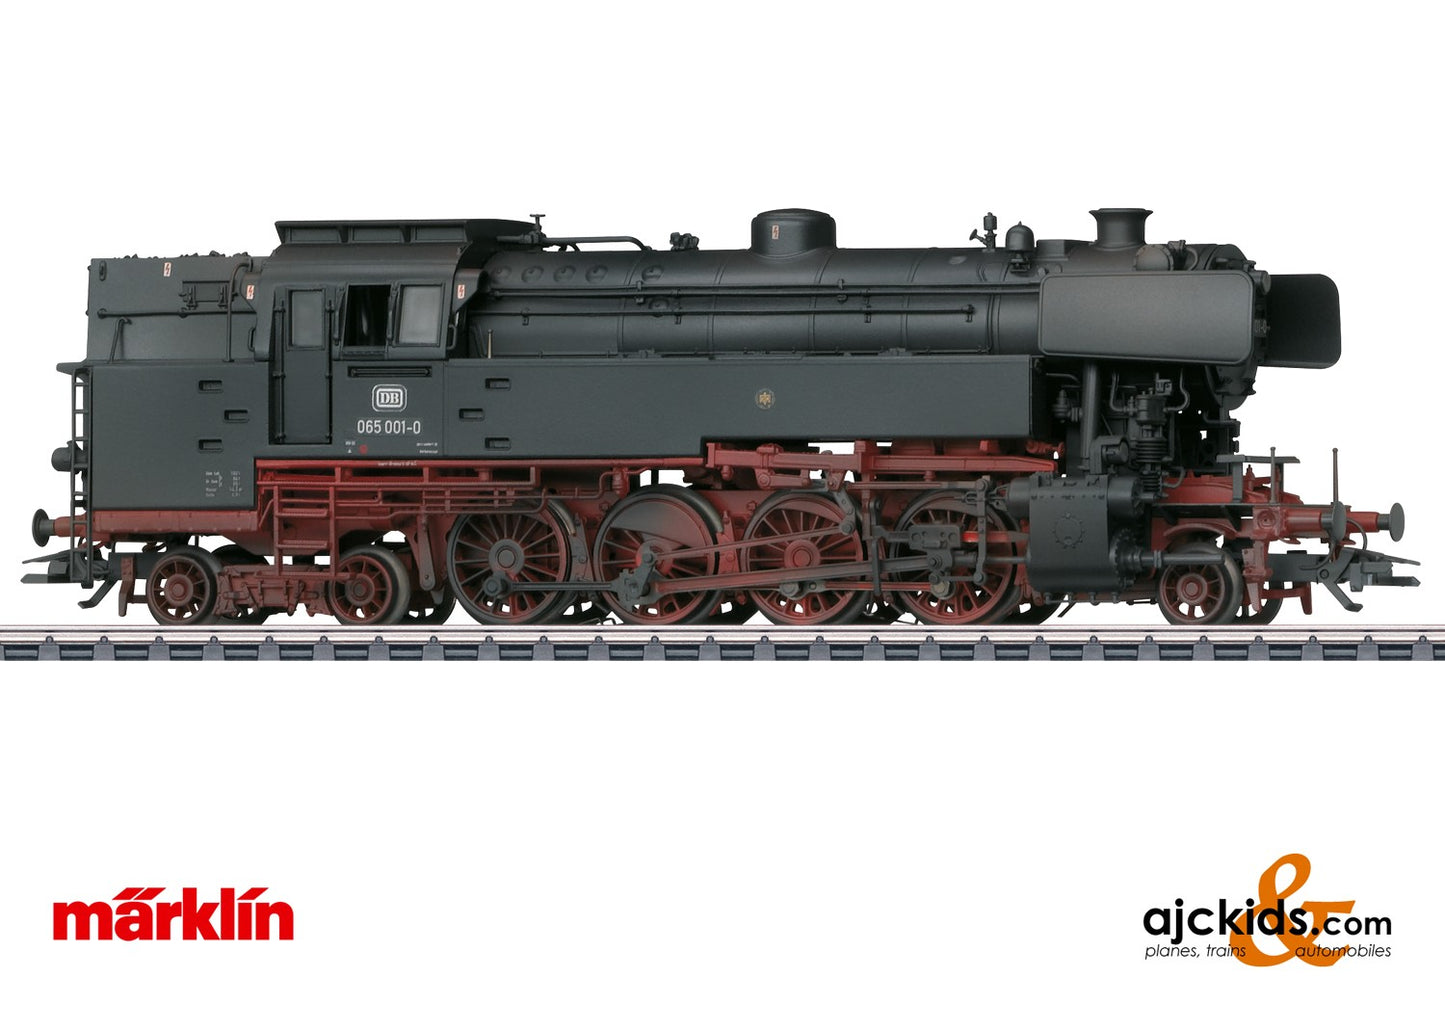 Marklin 39651 - Class 065 Steam Locomotive, EAN 4001883396514 at Ajckids.com